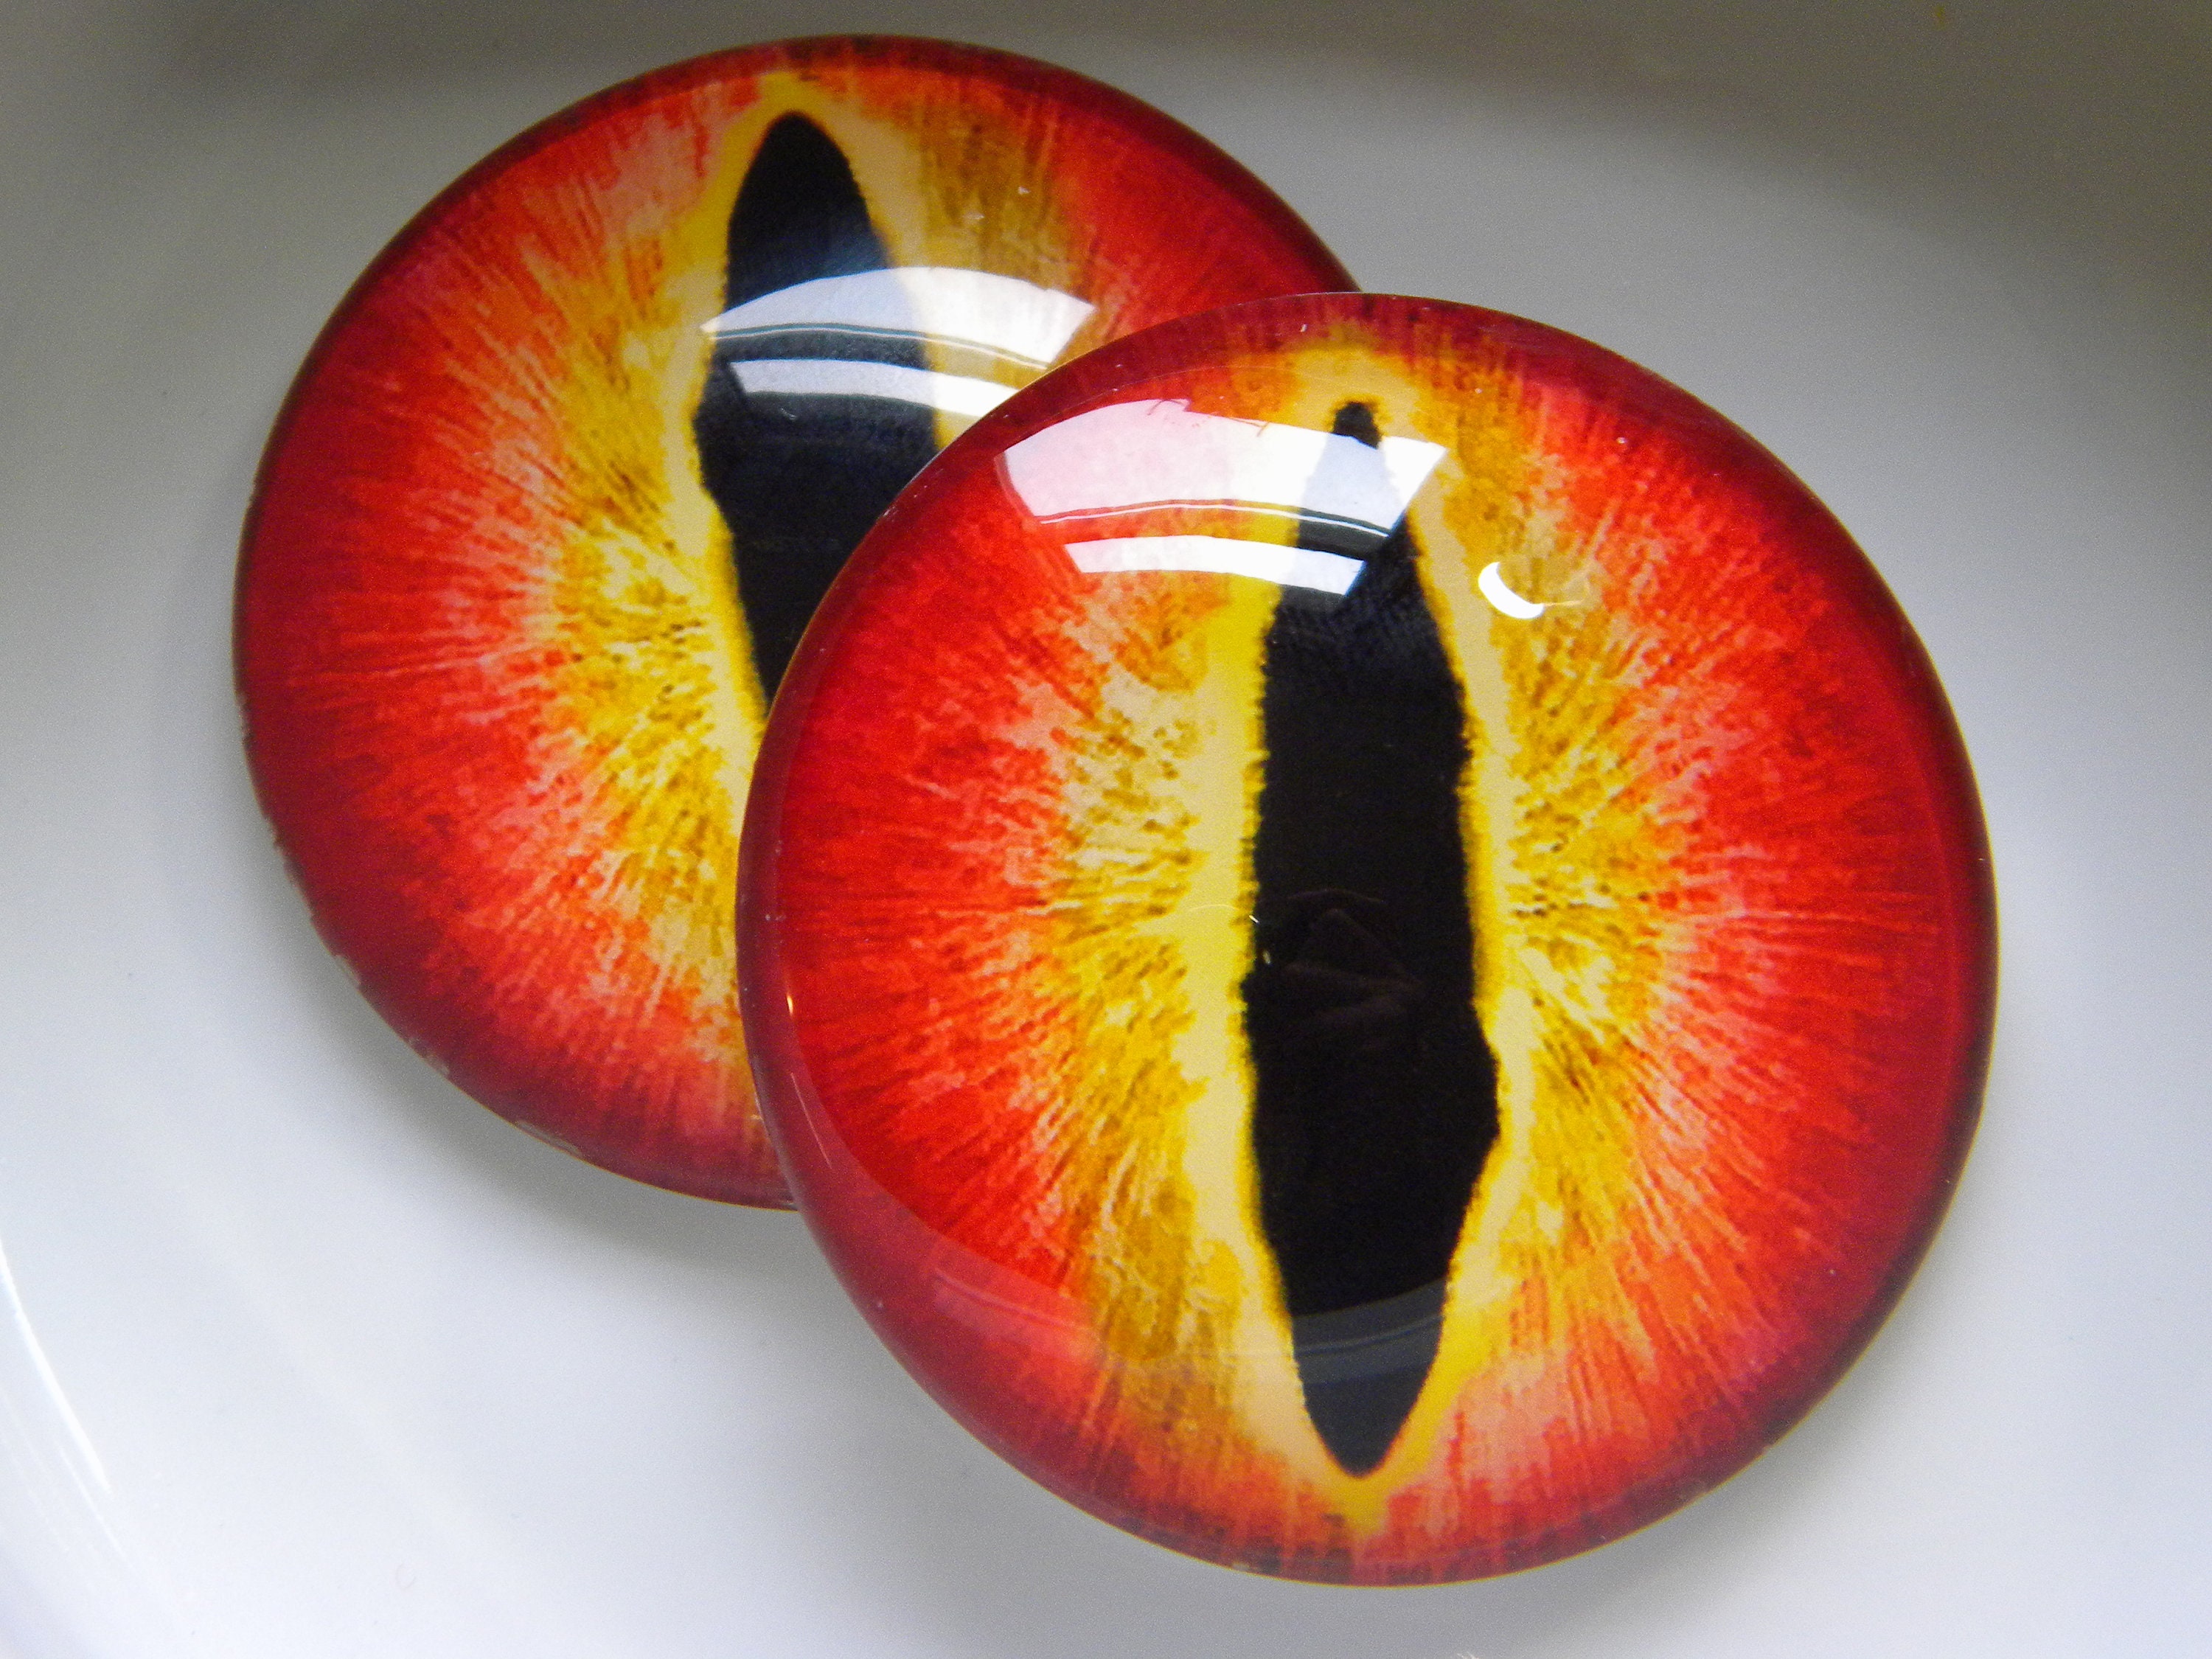 50mm Red Dragon Glass Eyes - Large 2 Inch Fantasy Eyes – Handmade Glass Eyes